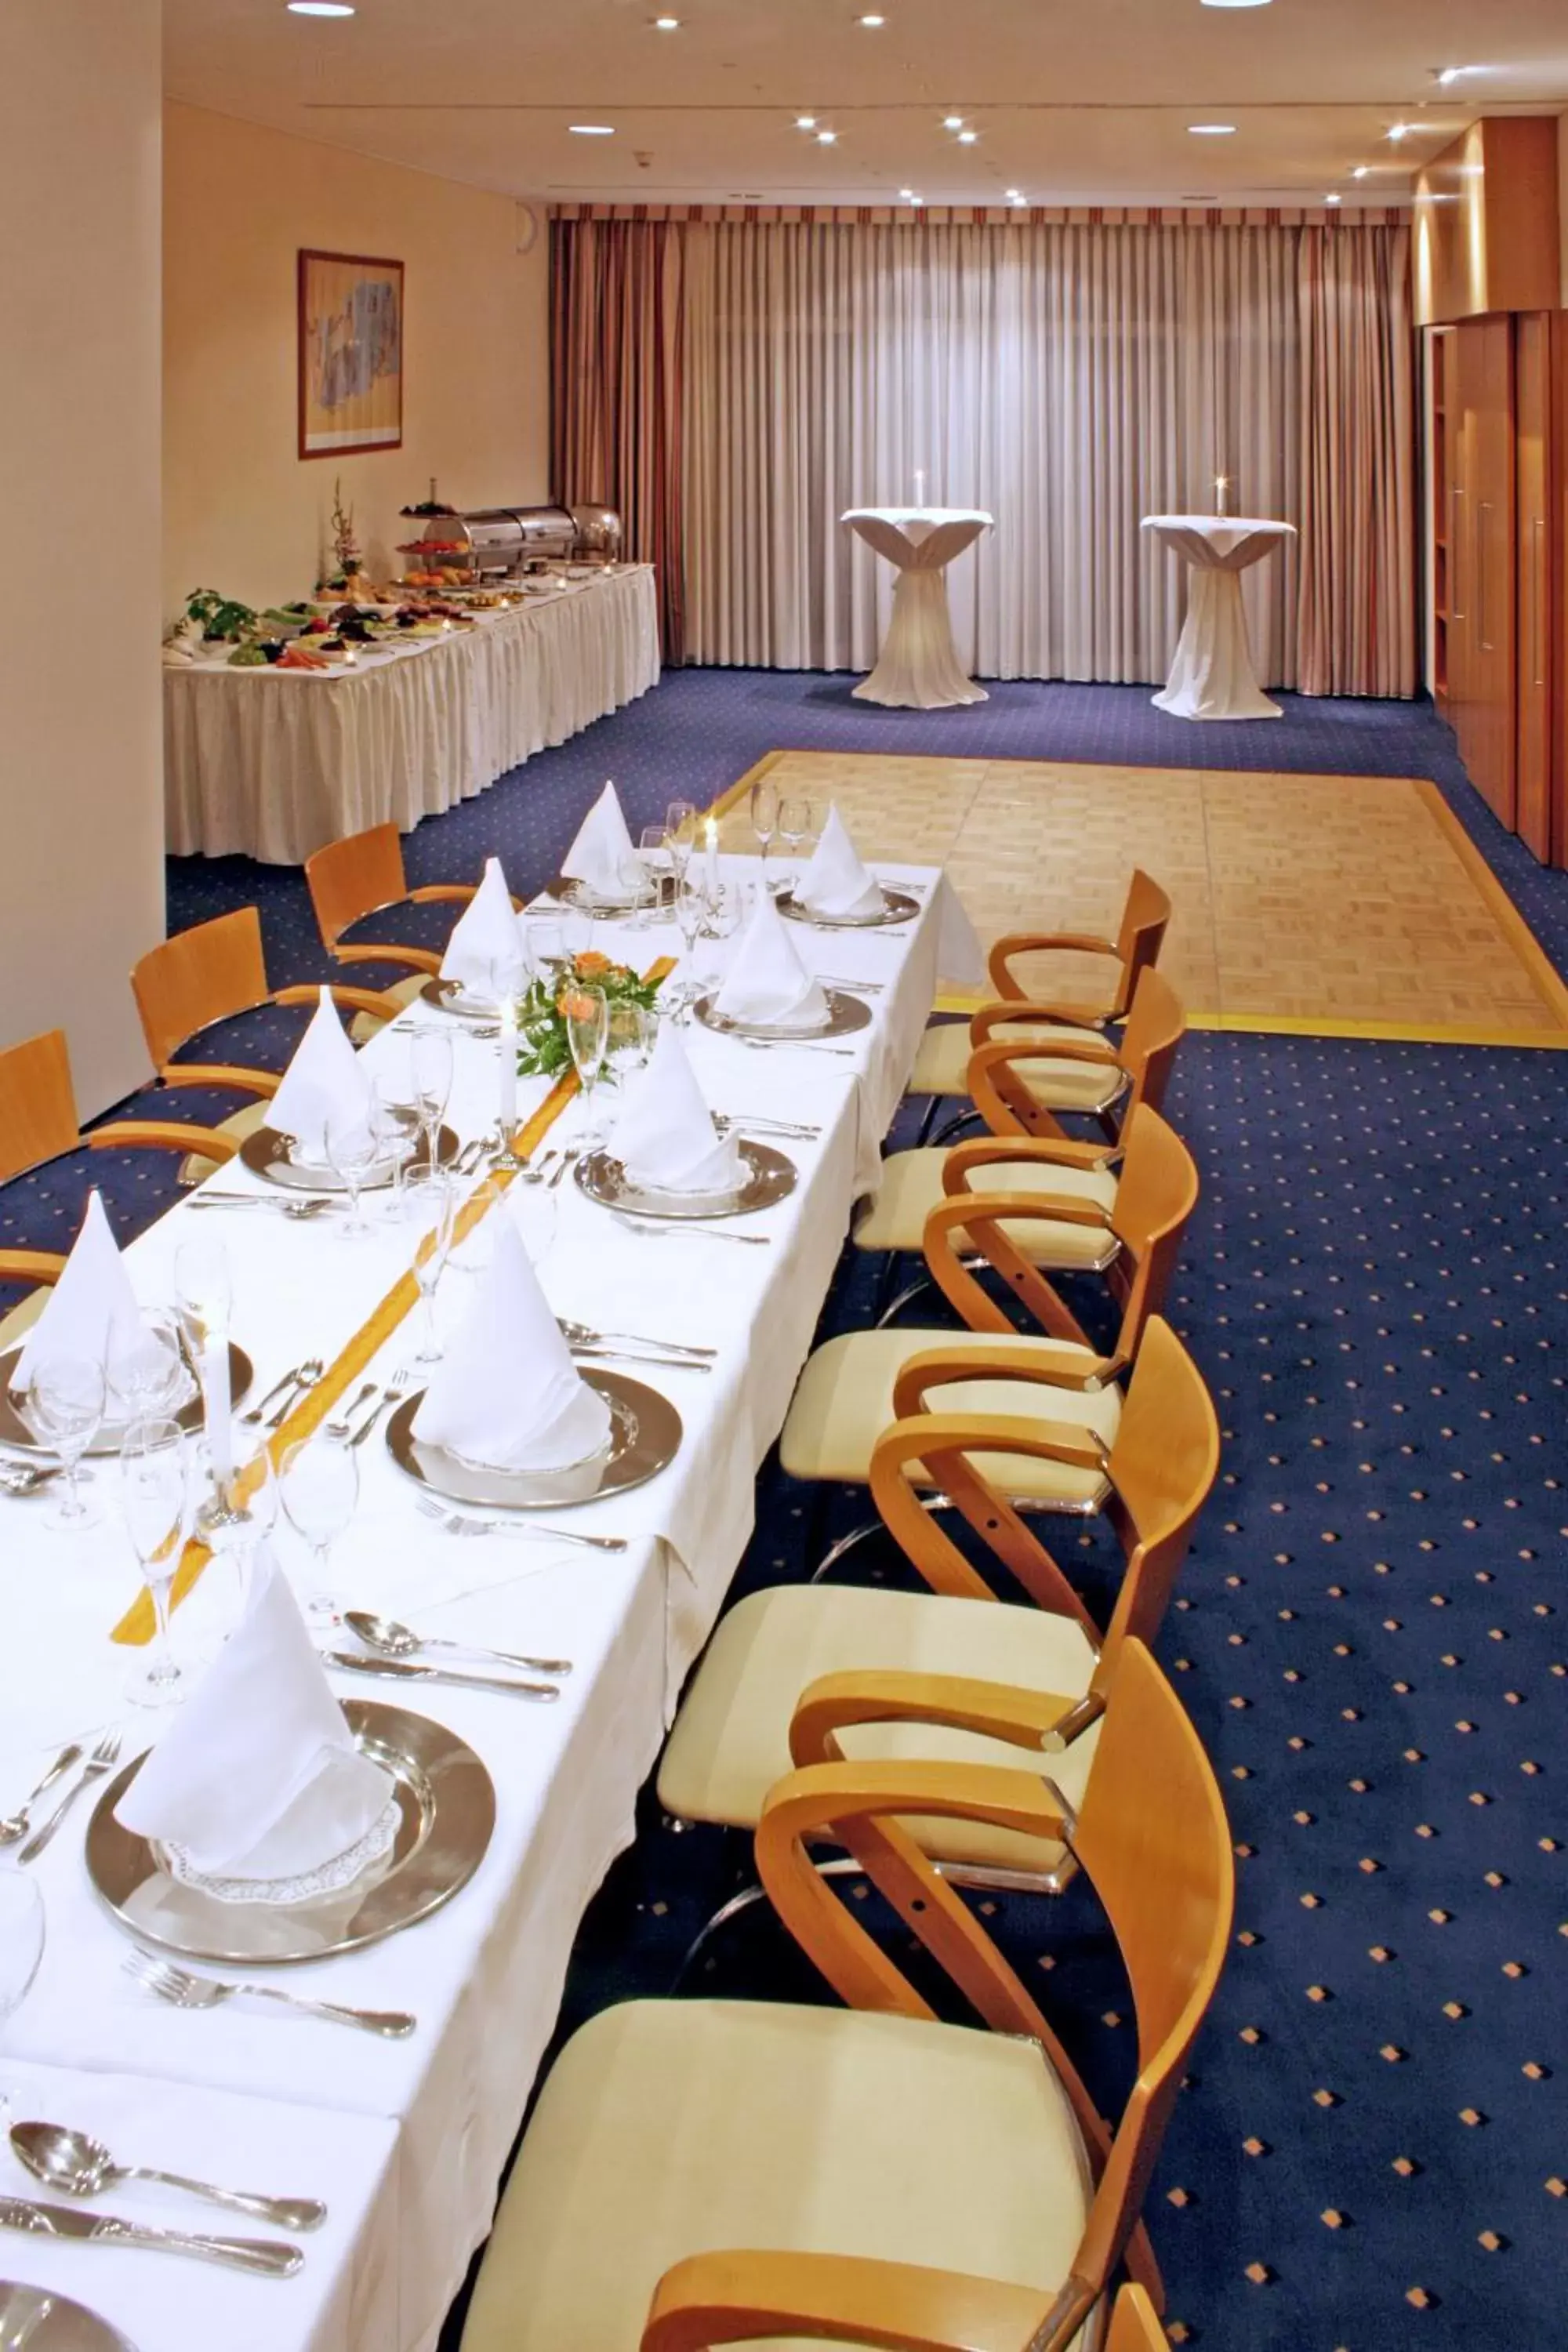 Banquet/Function facilities, Banquet Facilities in Best Western Hotel Halle-Merseburg